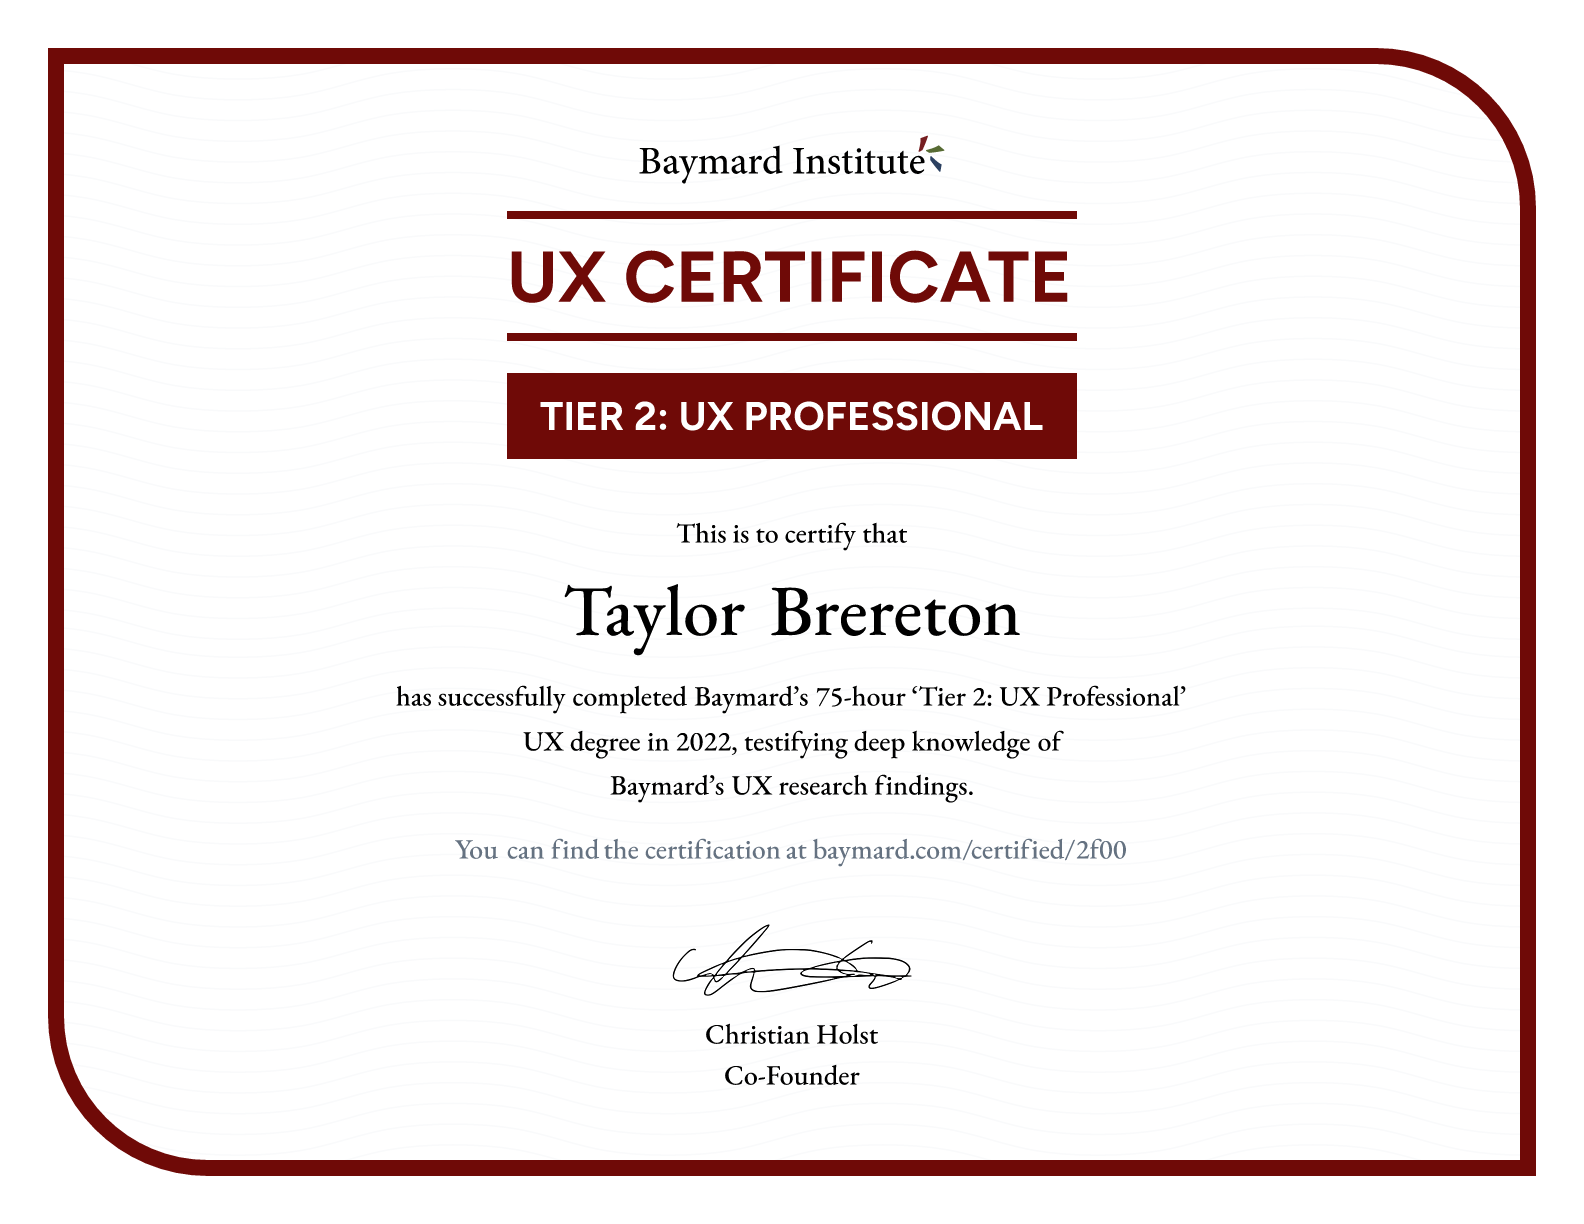 Taylor Brereton’s certificate